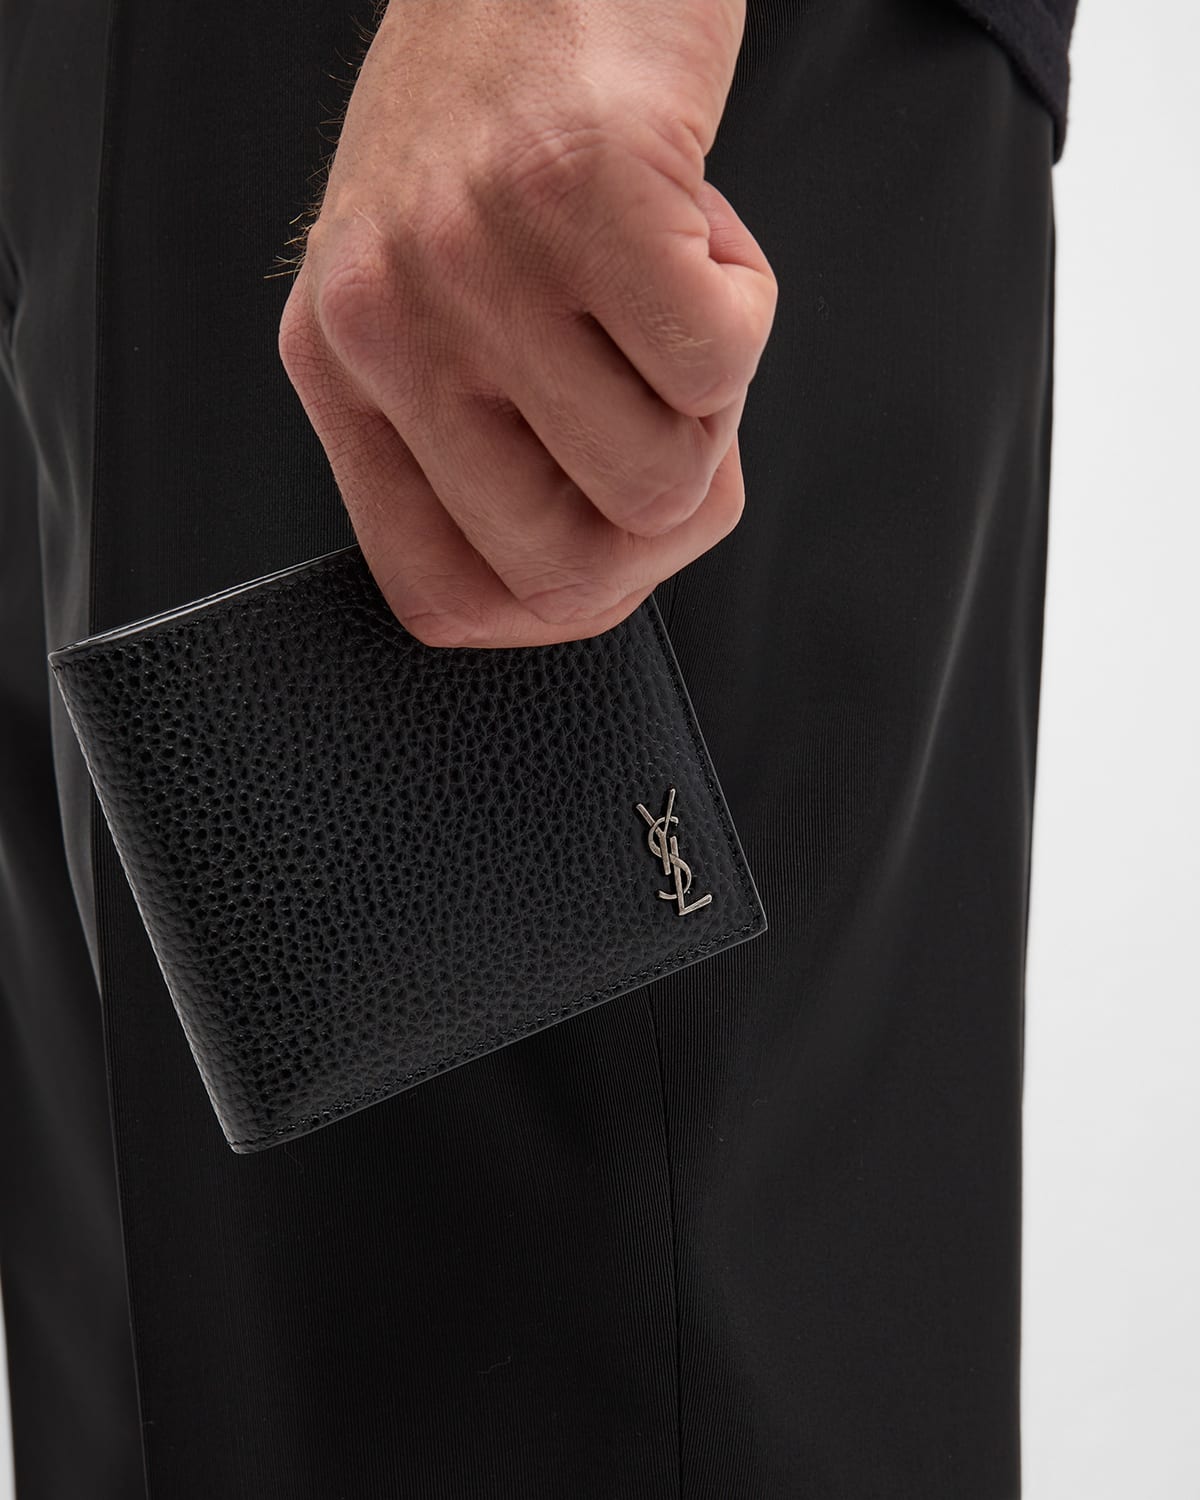 Saint Laurent Men's Ysl Pebbled Leather Wallet In Nero